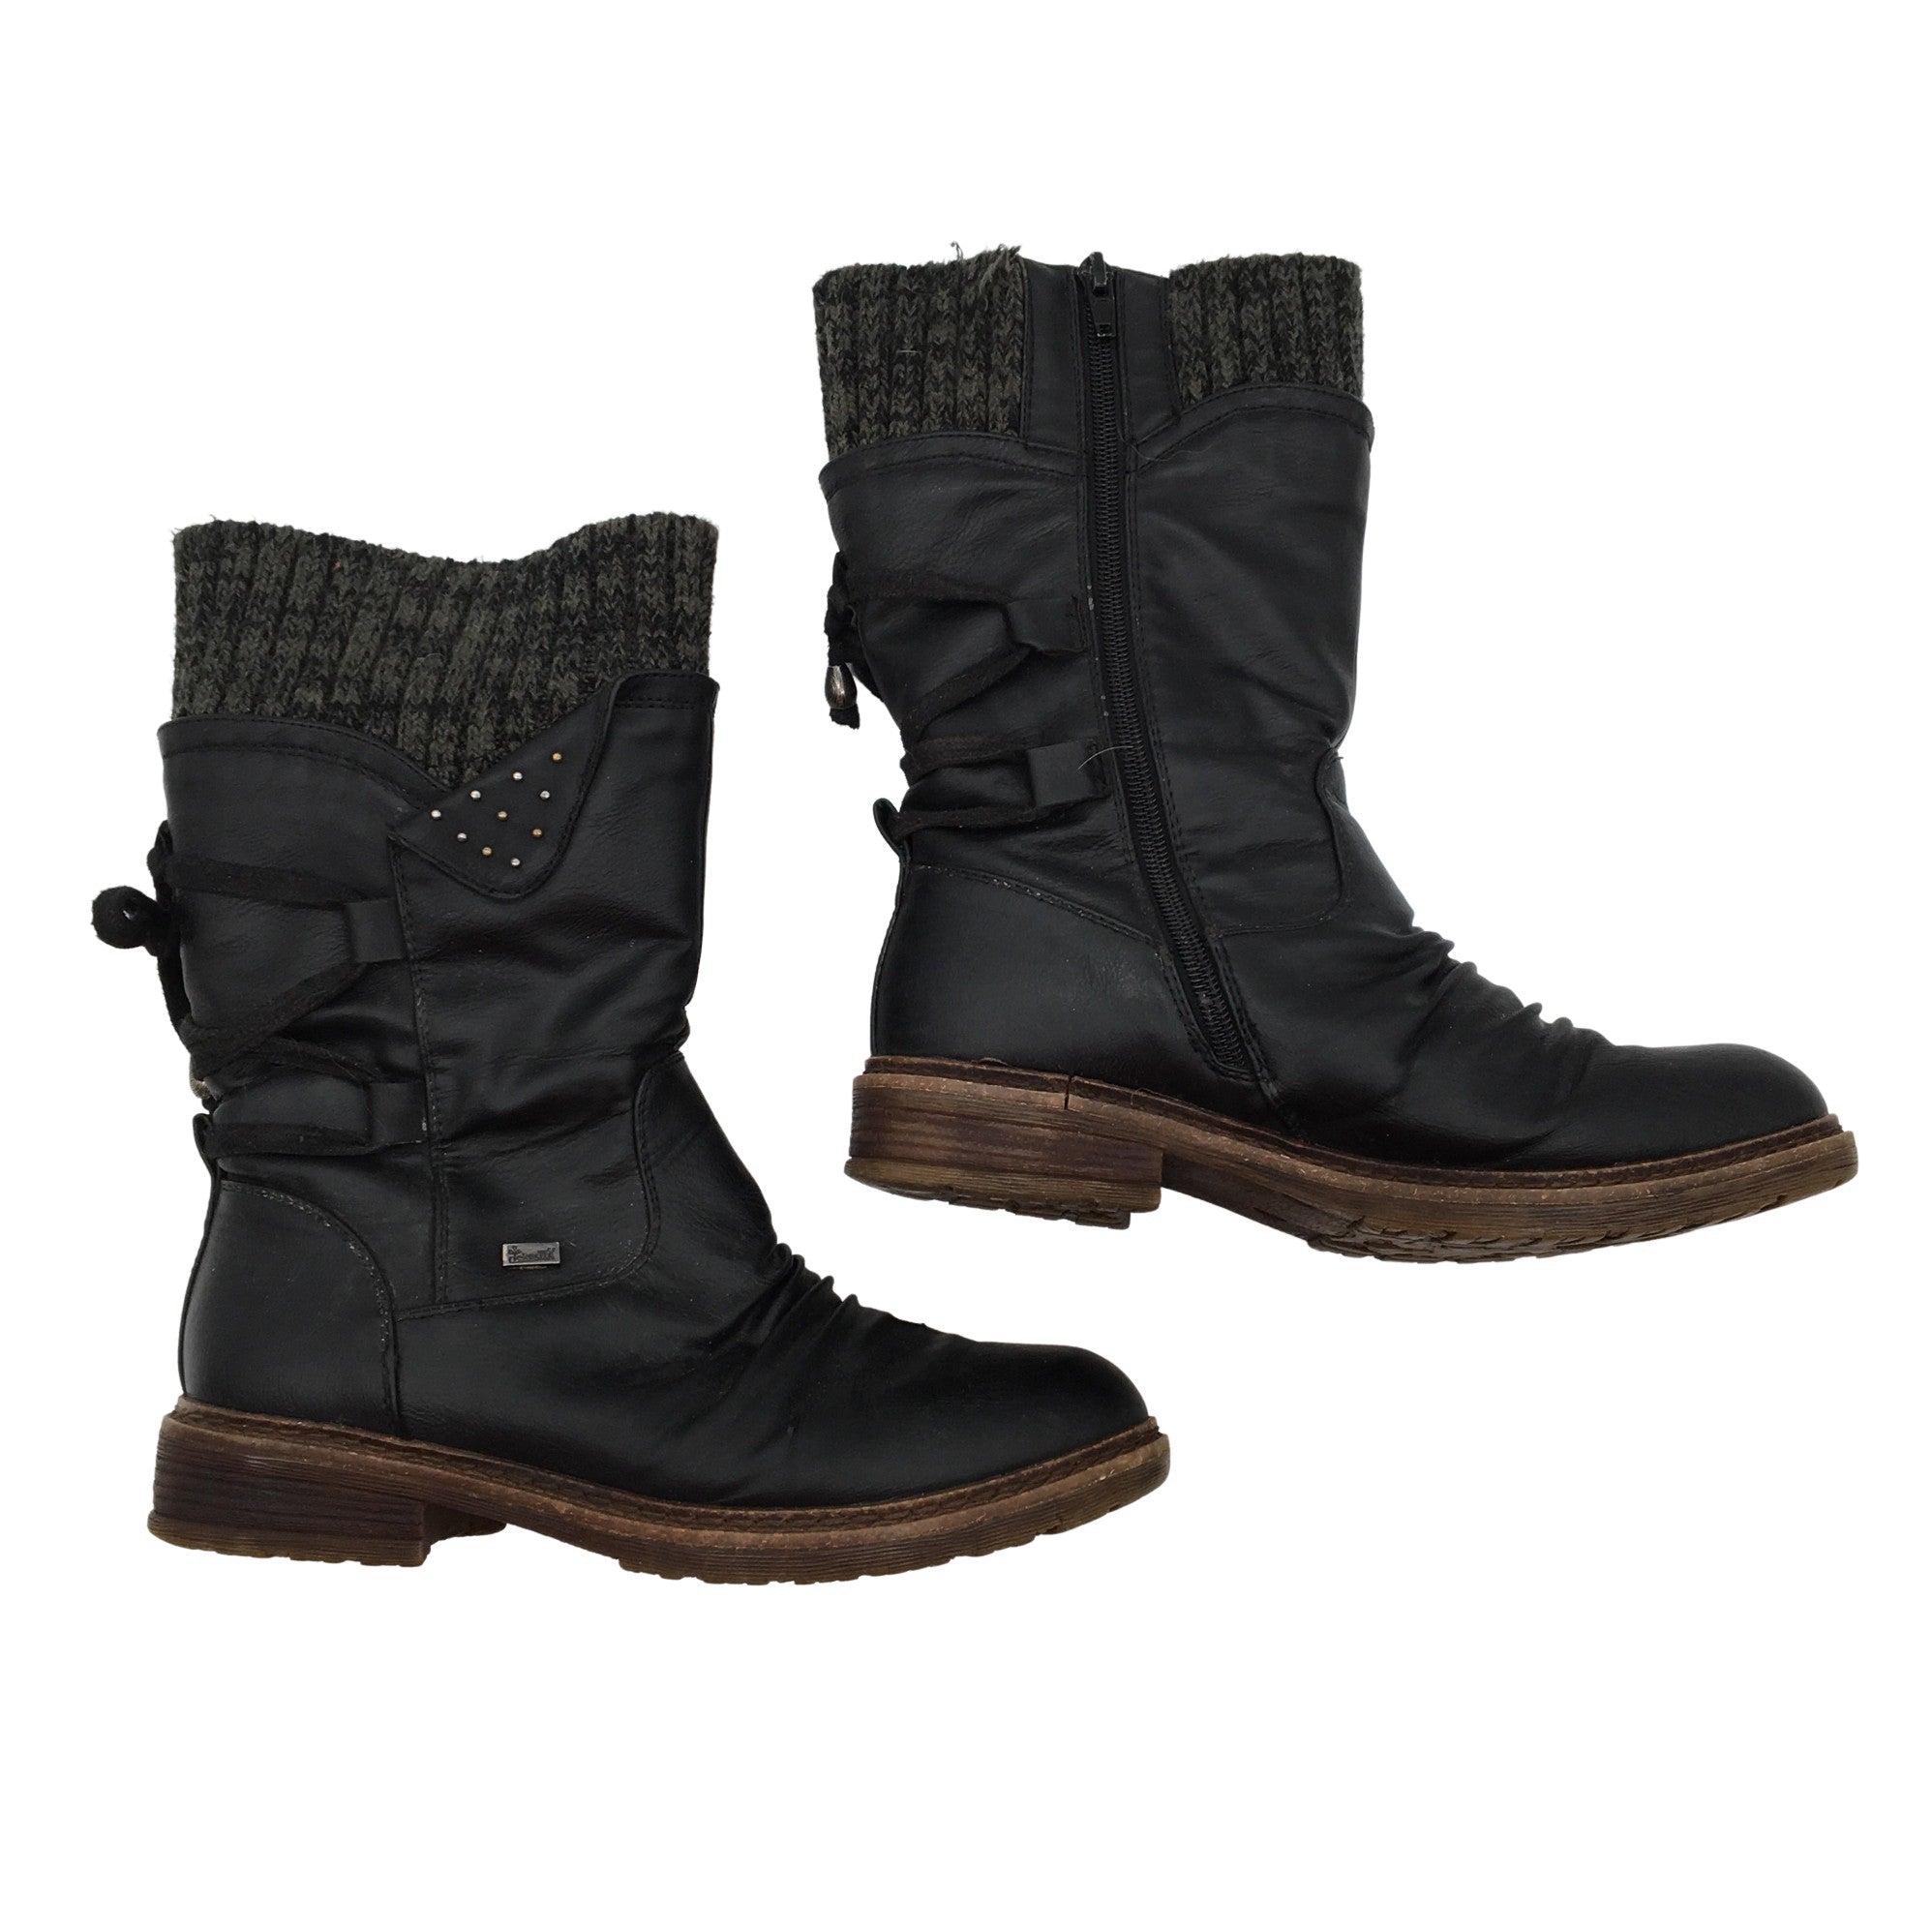 per ongeluk Afvoer geroosterd brood Women's Rieker Boots, size 38 (Black) | Emmy